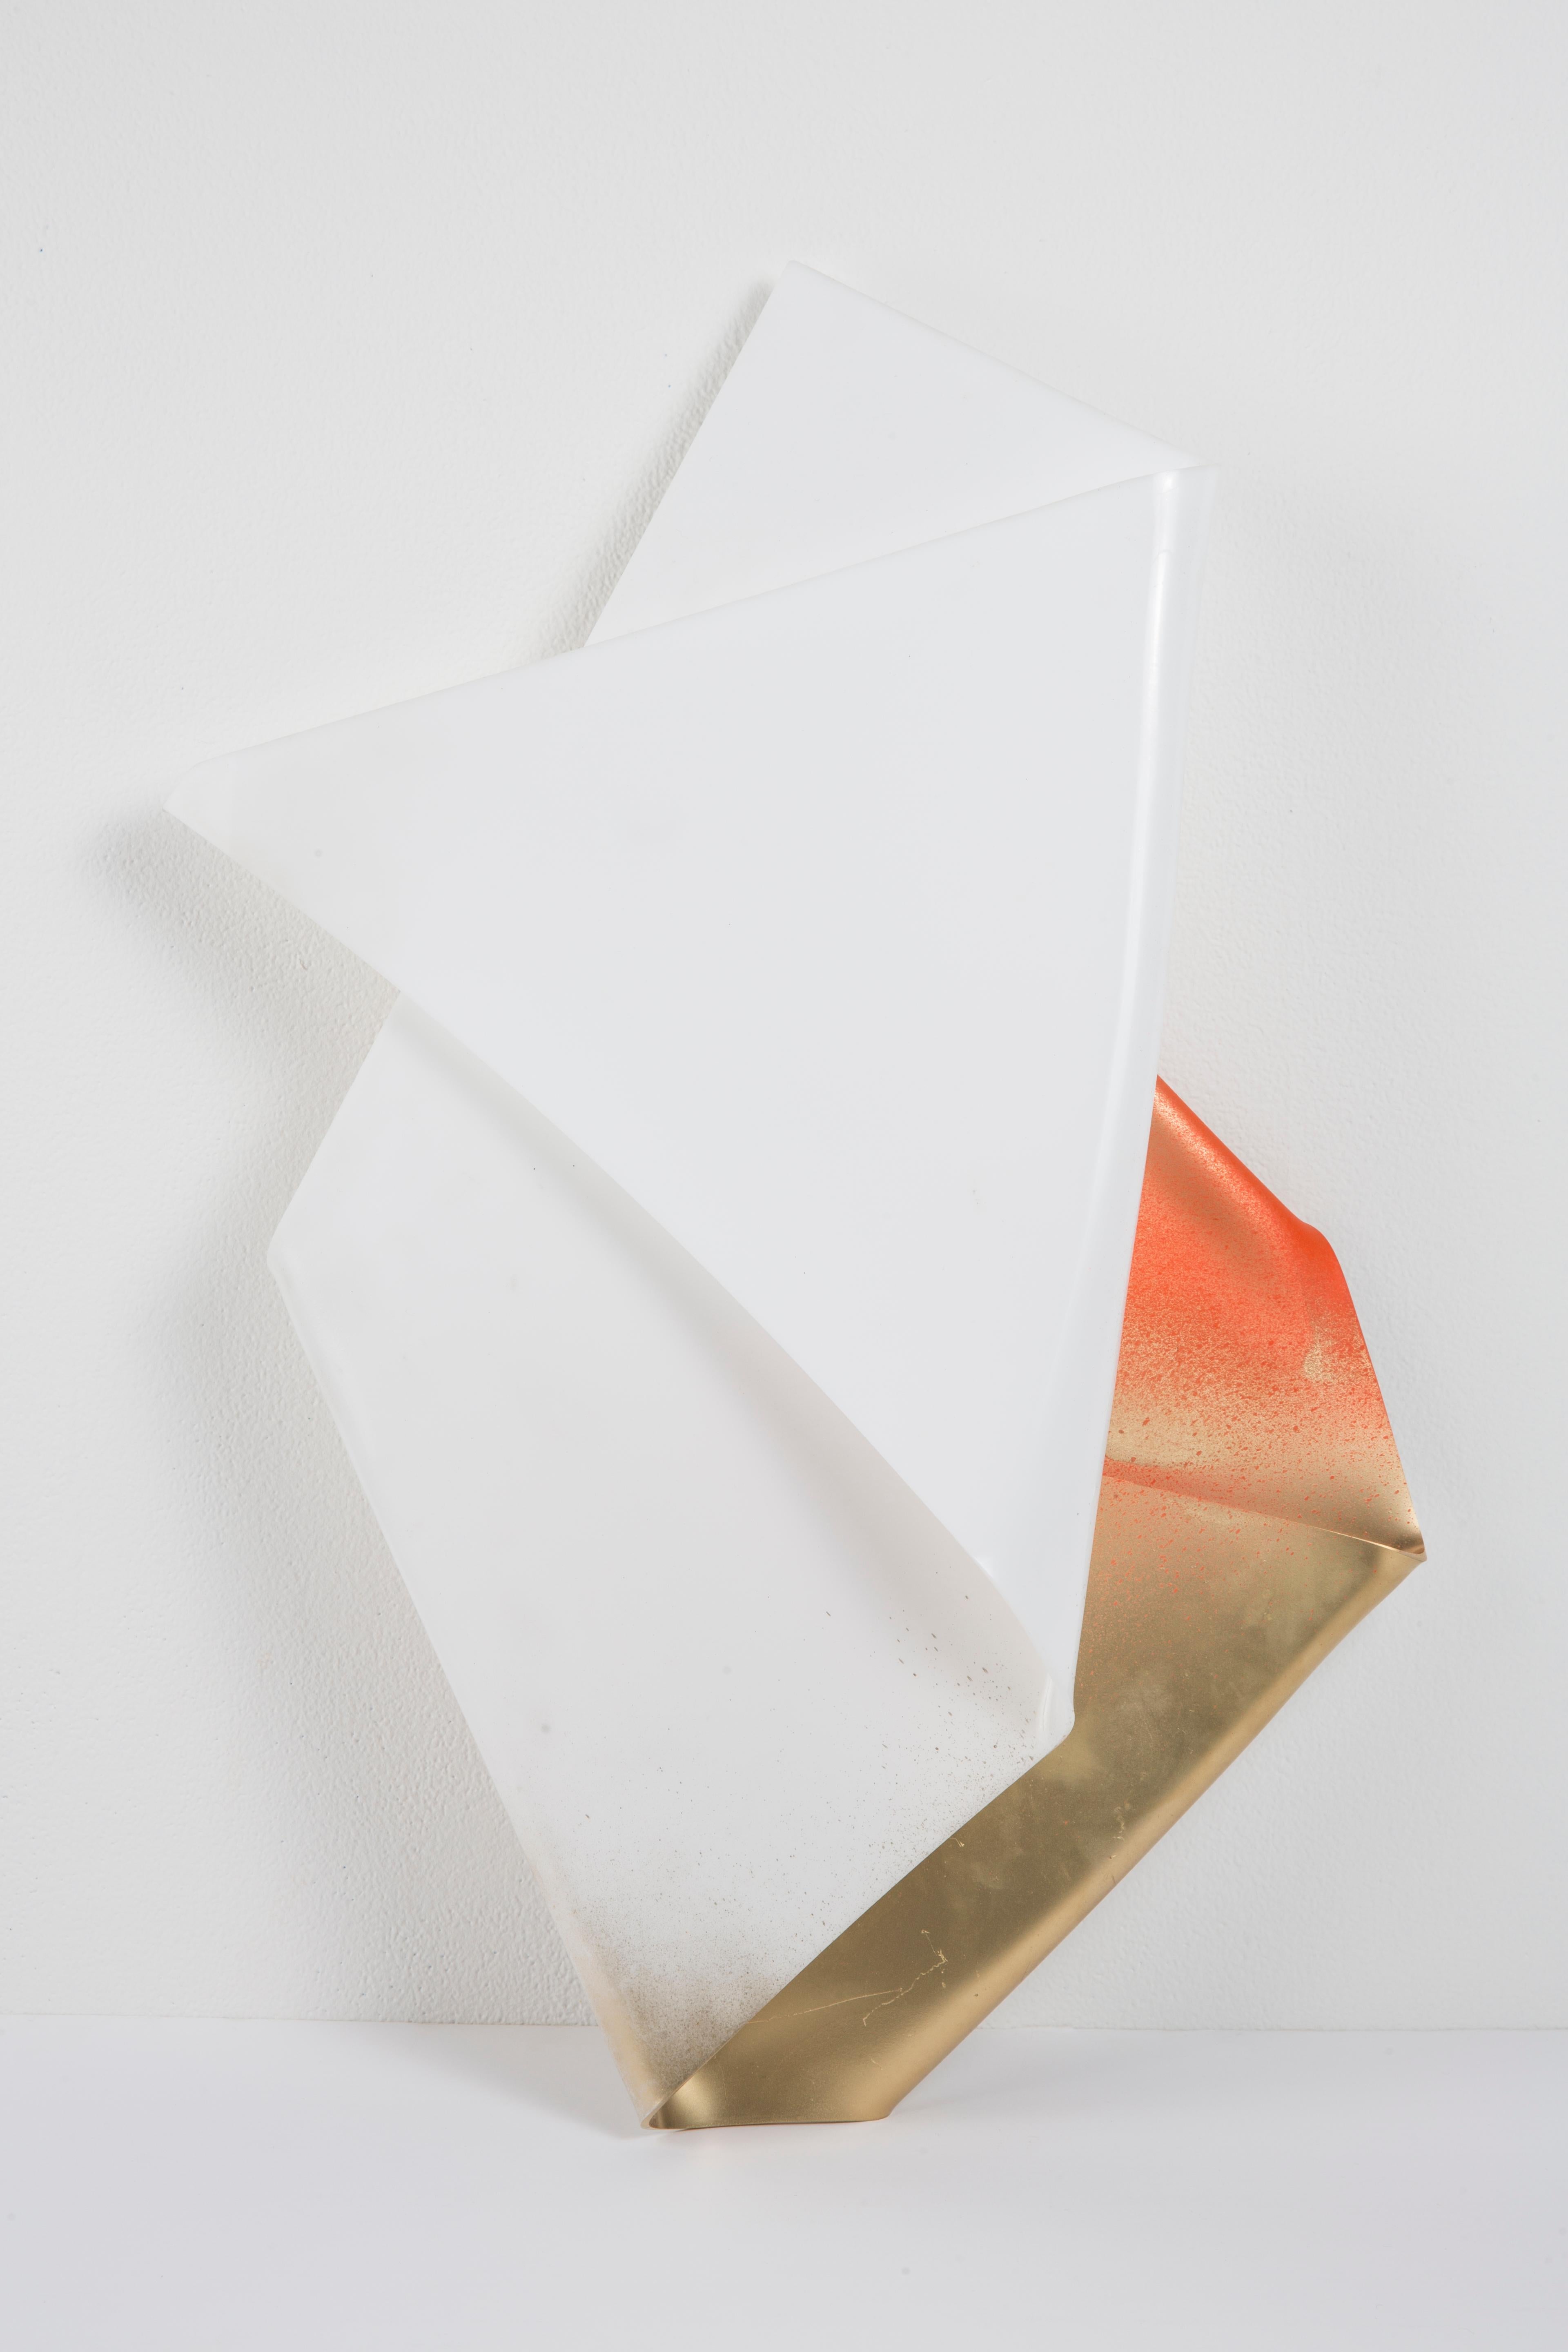 Andrès Bustamante Abstract Sculpture - VUELVE A AMANECER - Bent Plexiglass Wall Hanging Sculpture, White, Gold, Orange